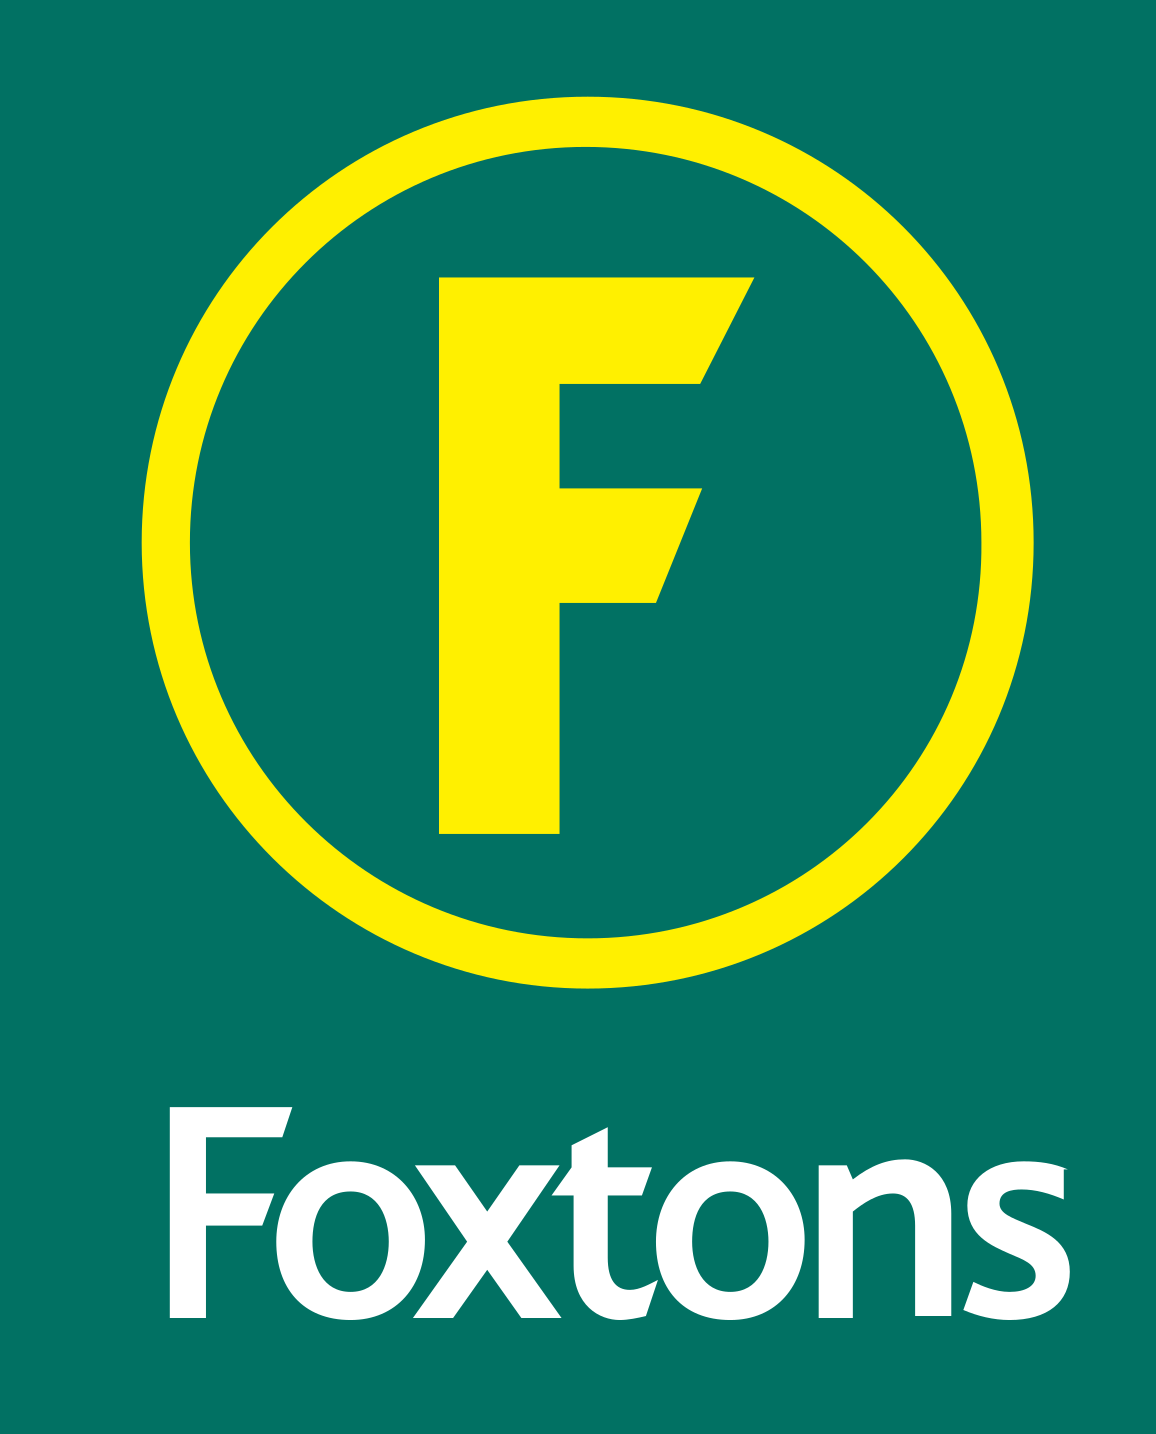 foxtons-directors-quit-following-shareholder-opposition